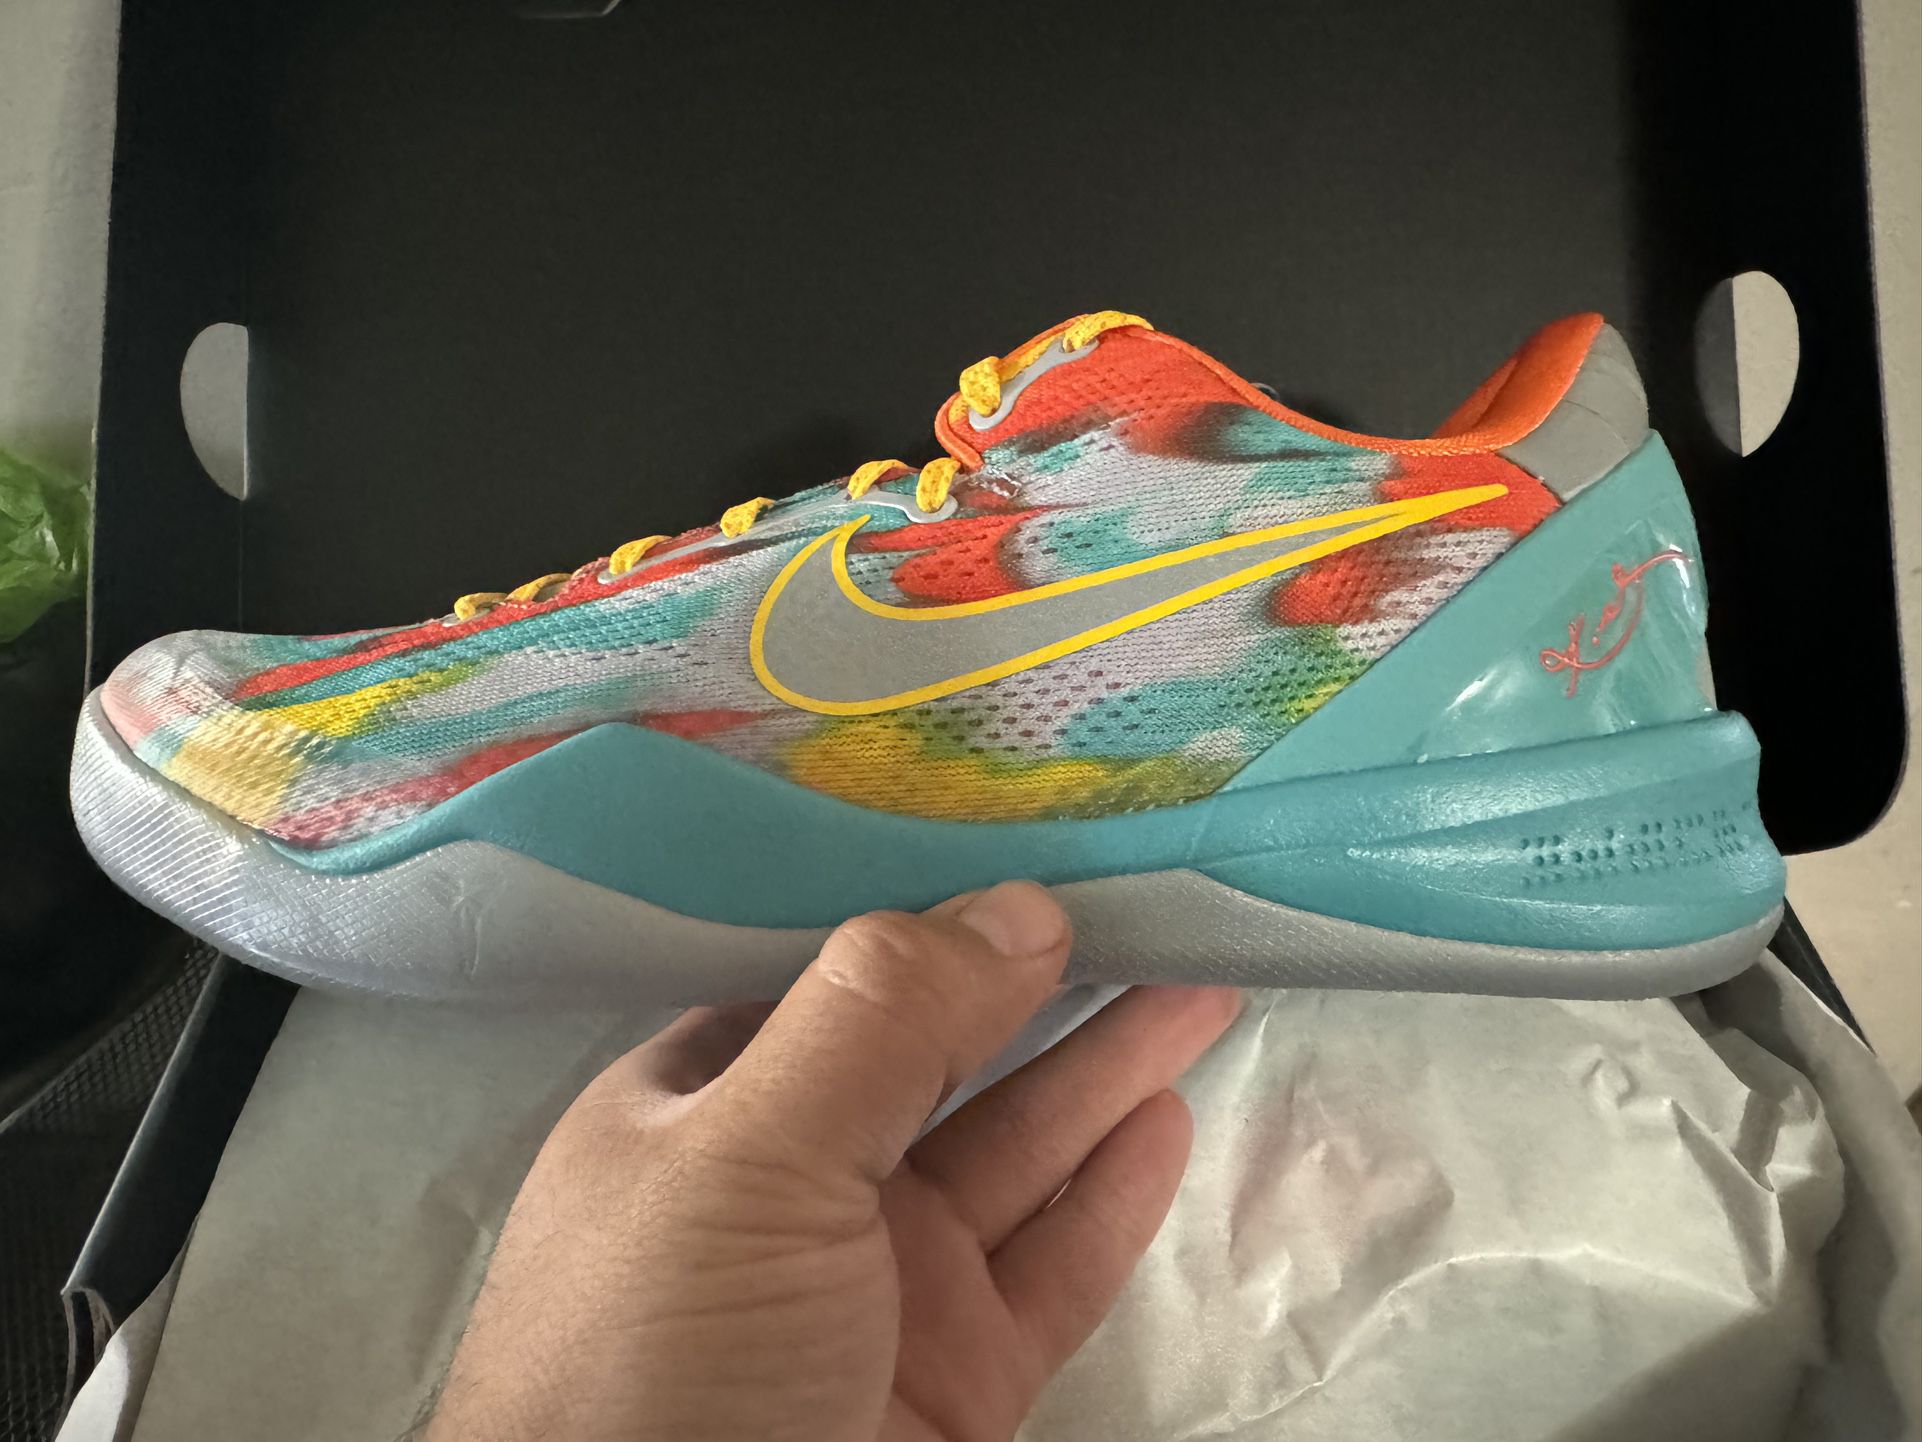 Nike Kobe 8 Protro Venice Beach - Size 10.5